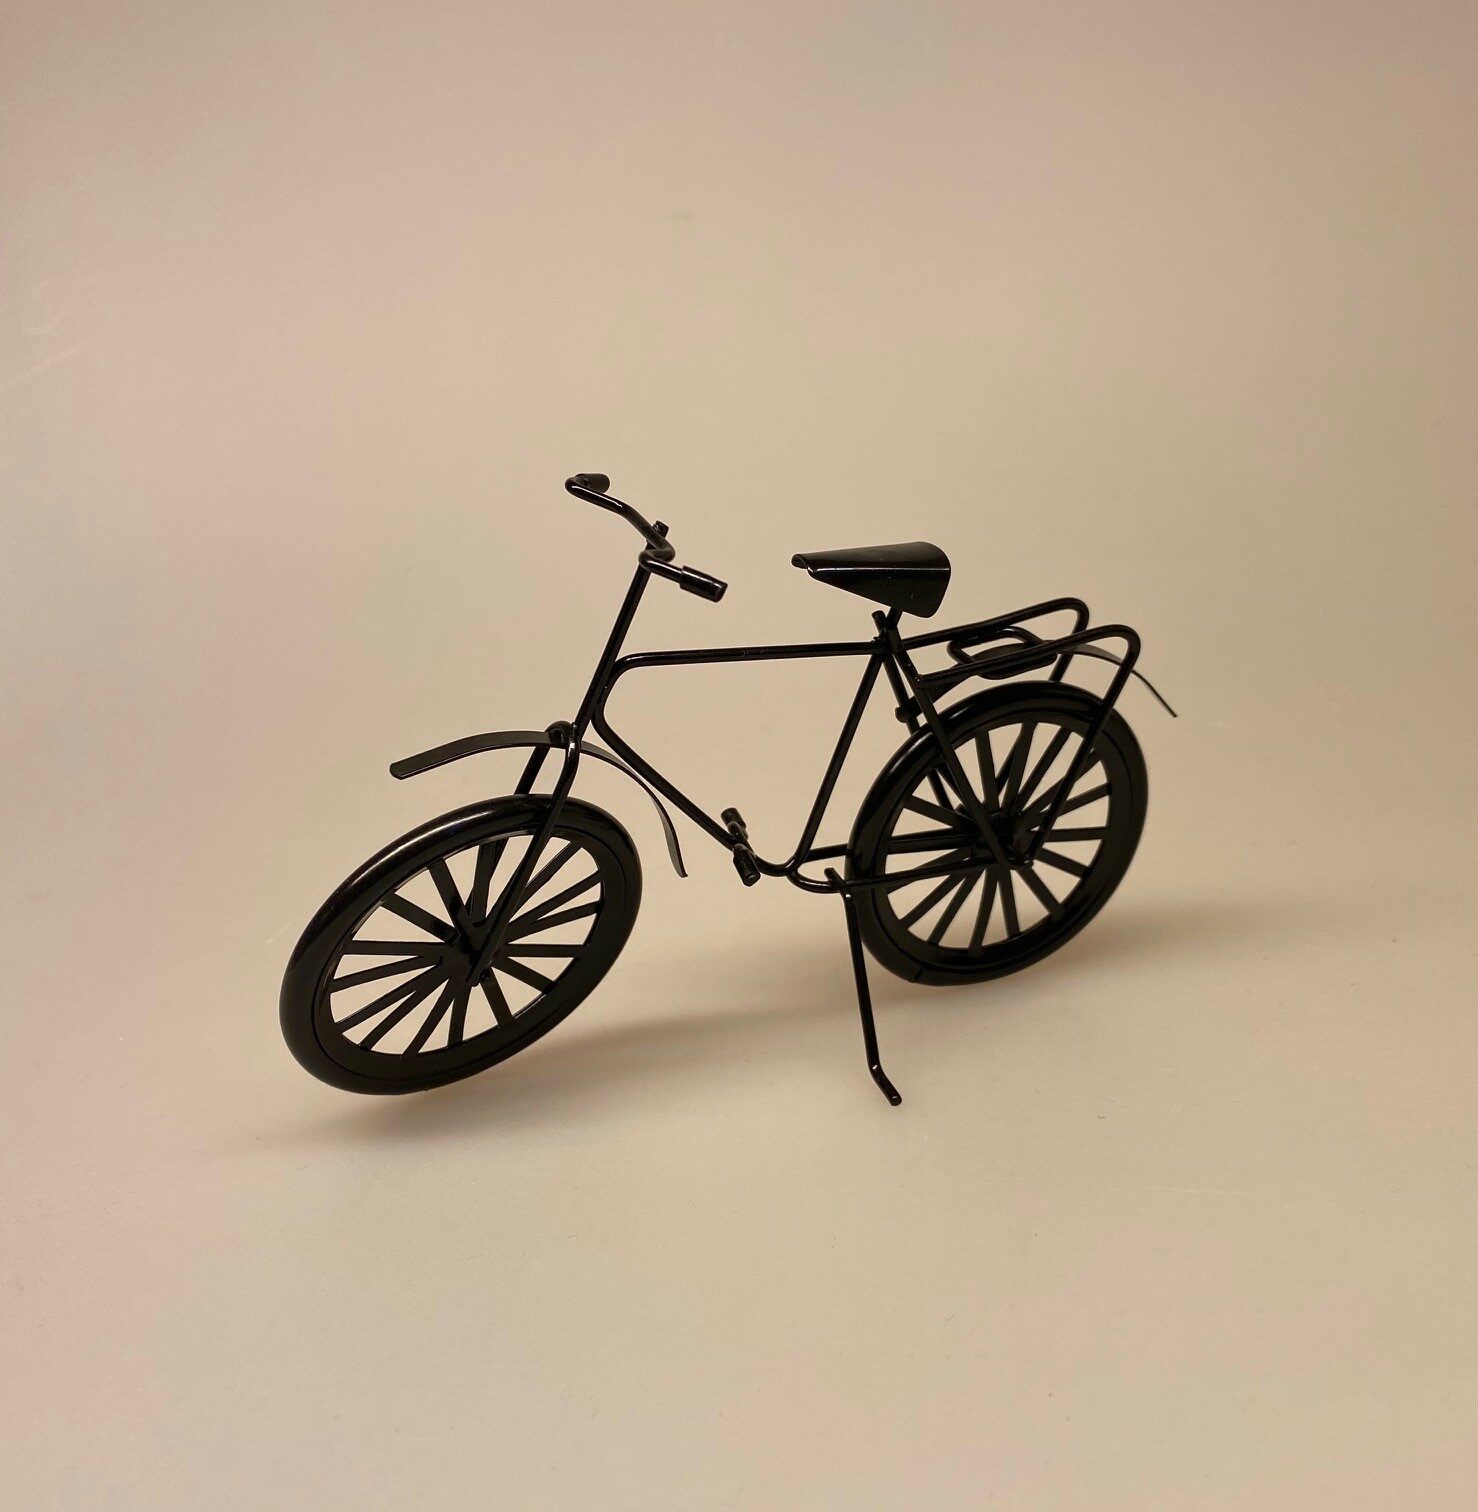 Cykel sort metal miniature 1:12, cukel, herrecykel, miniature, mini, model cykel, dukkehus, dukkehusstørrelse, symbolsk, gavekort til cykel, sangskjuler, konformationsgave, pengegave, cykelrytter, fritids, hobby, cyklist, rytter, biti, ribe, sætterkasse, ting med cykler,